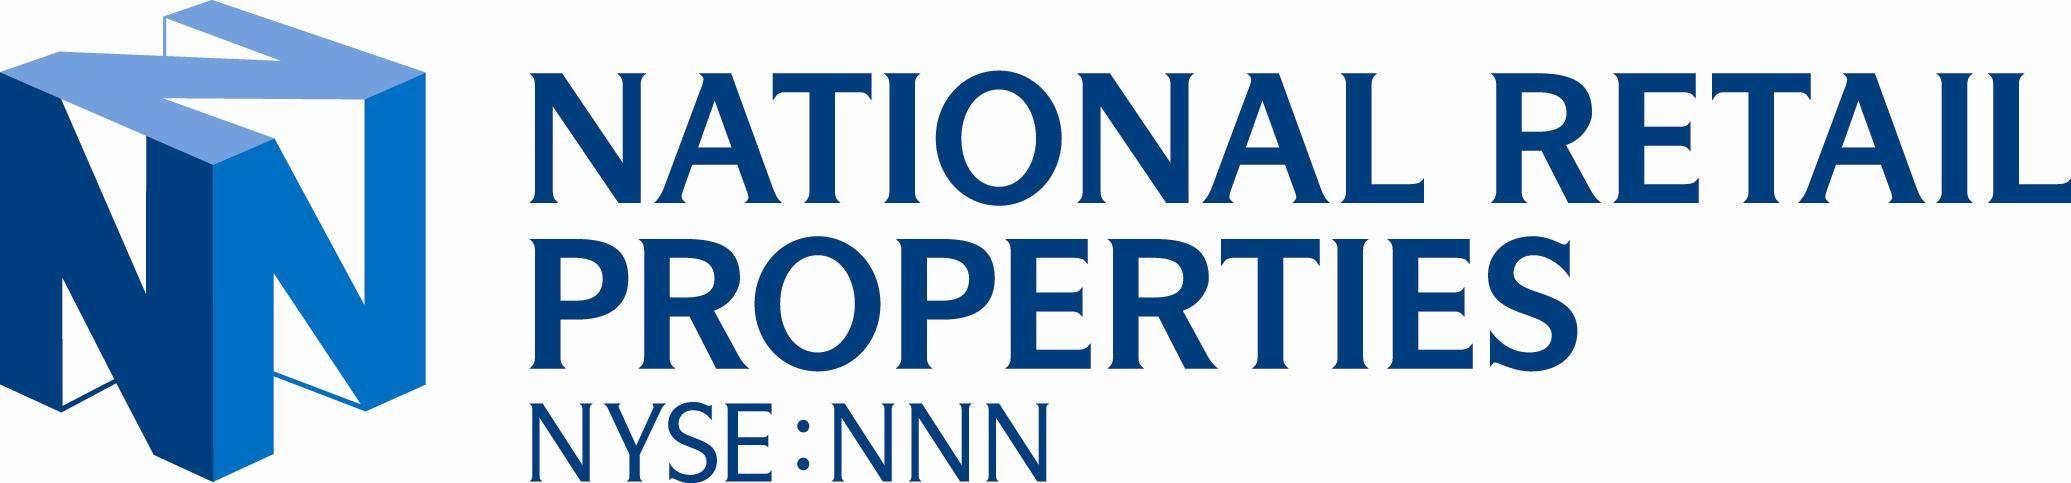 Nnn Logo - National Retail Properties, Inc. NNN - Additional Company ...